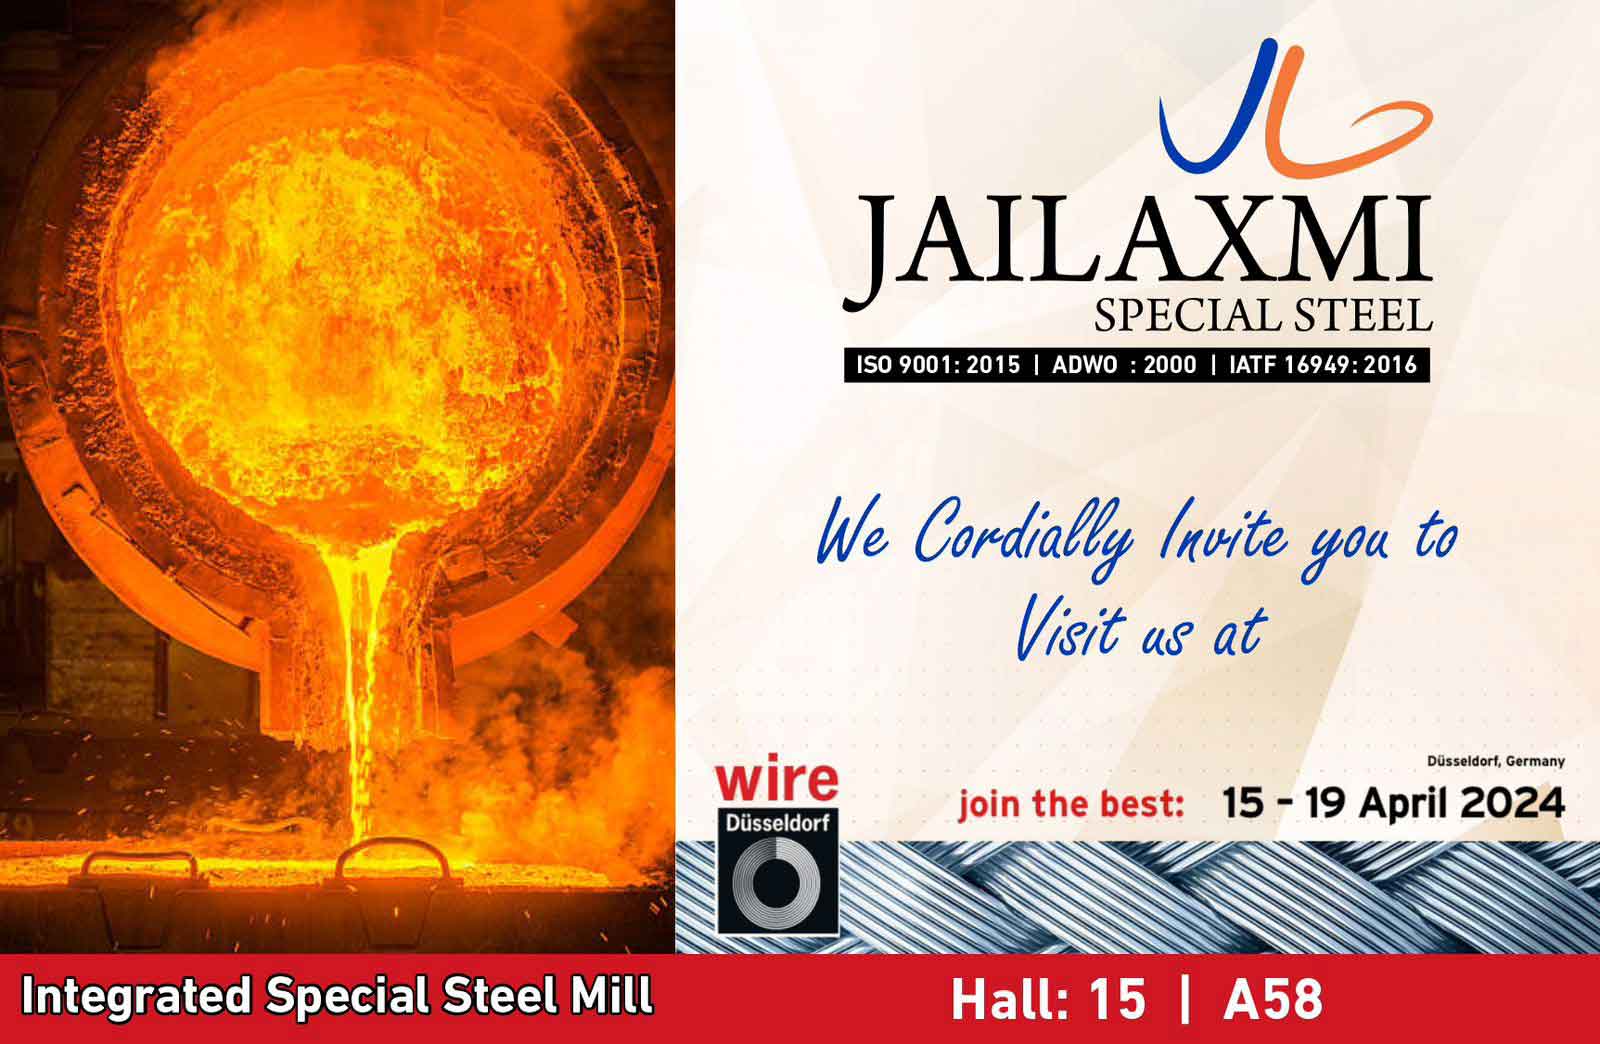 Wire-Susseldorf,-Germany---jailaxmi-Special-Steel-Mill-1